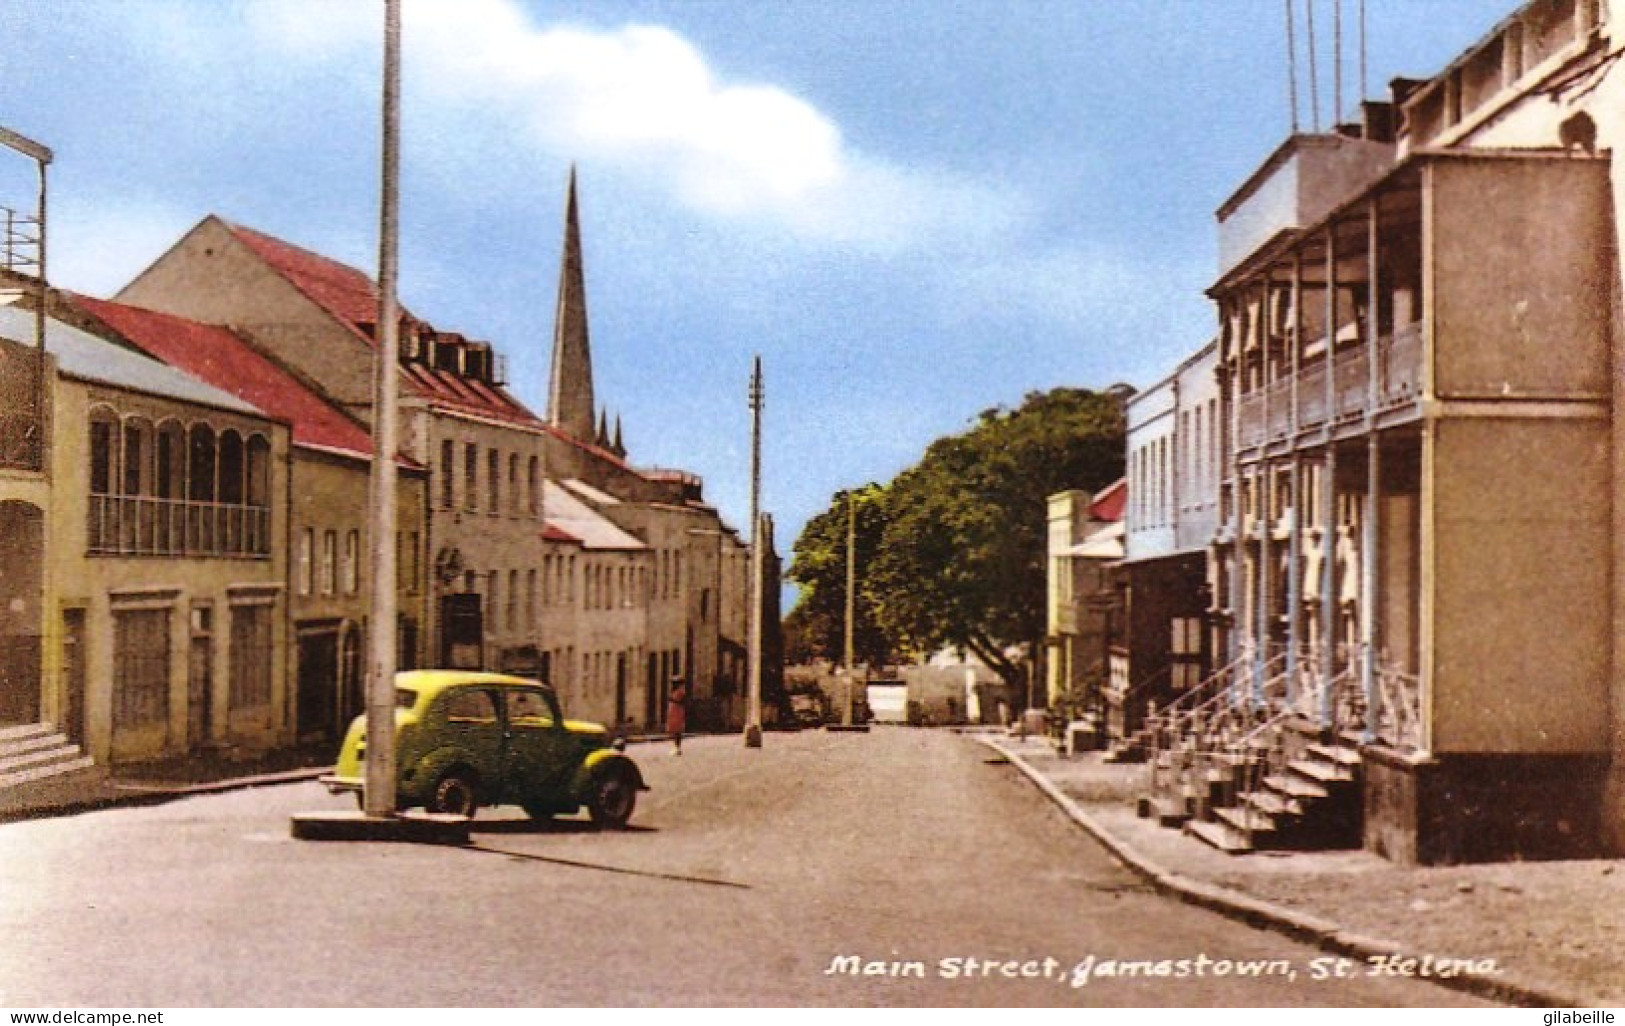 SAINTE HELENE - SAINT HELENA - Main Street - Gamestown - Saint Helena Island